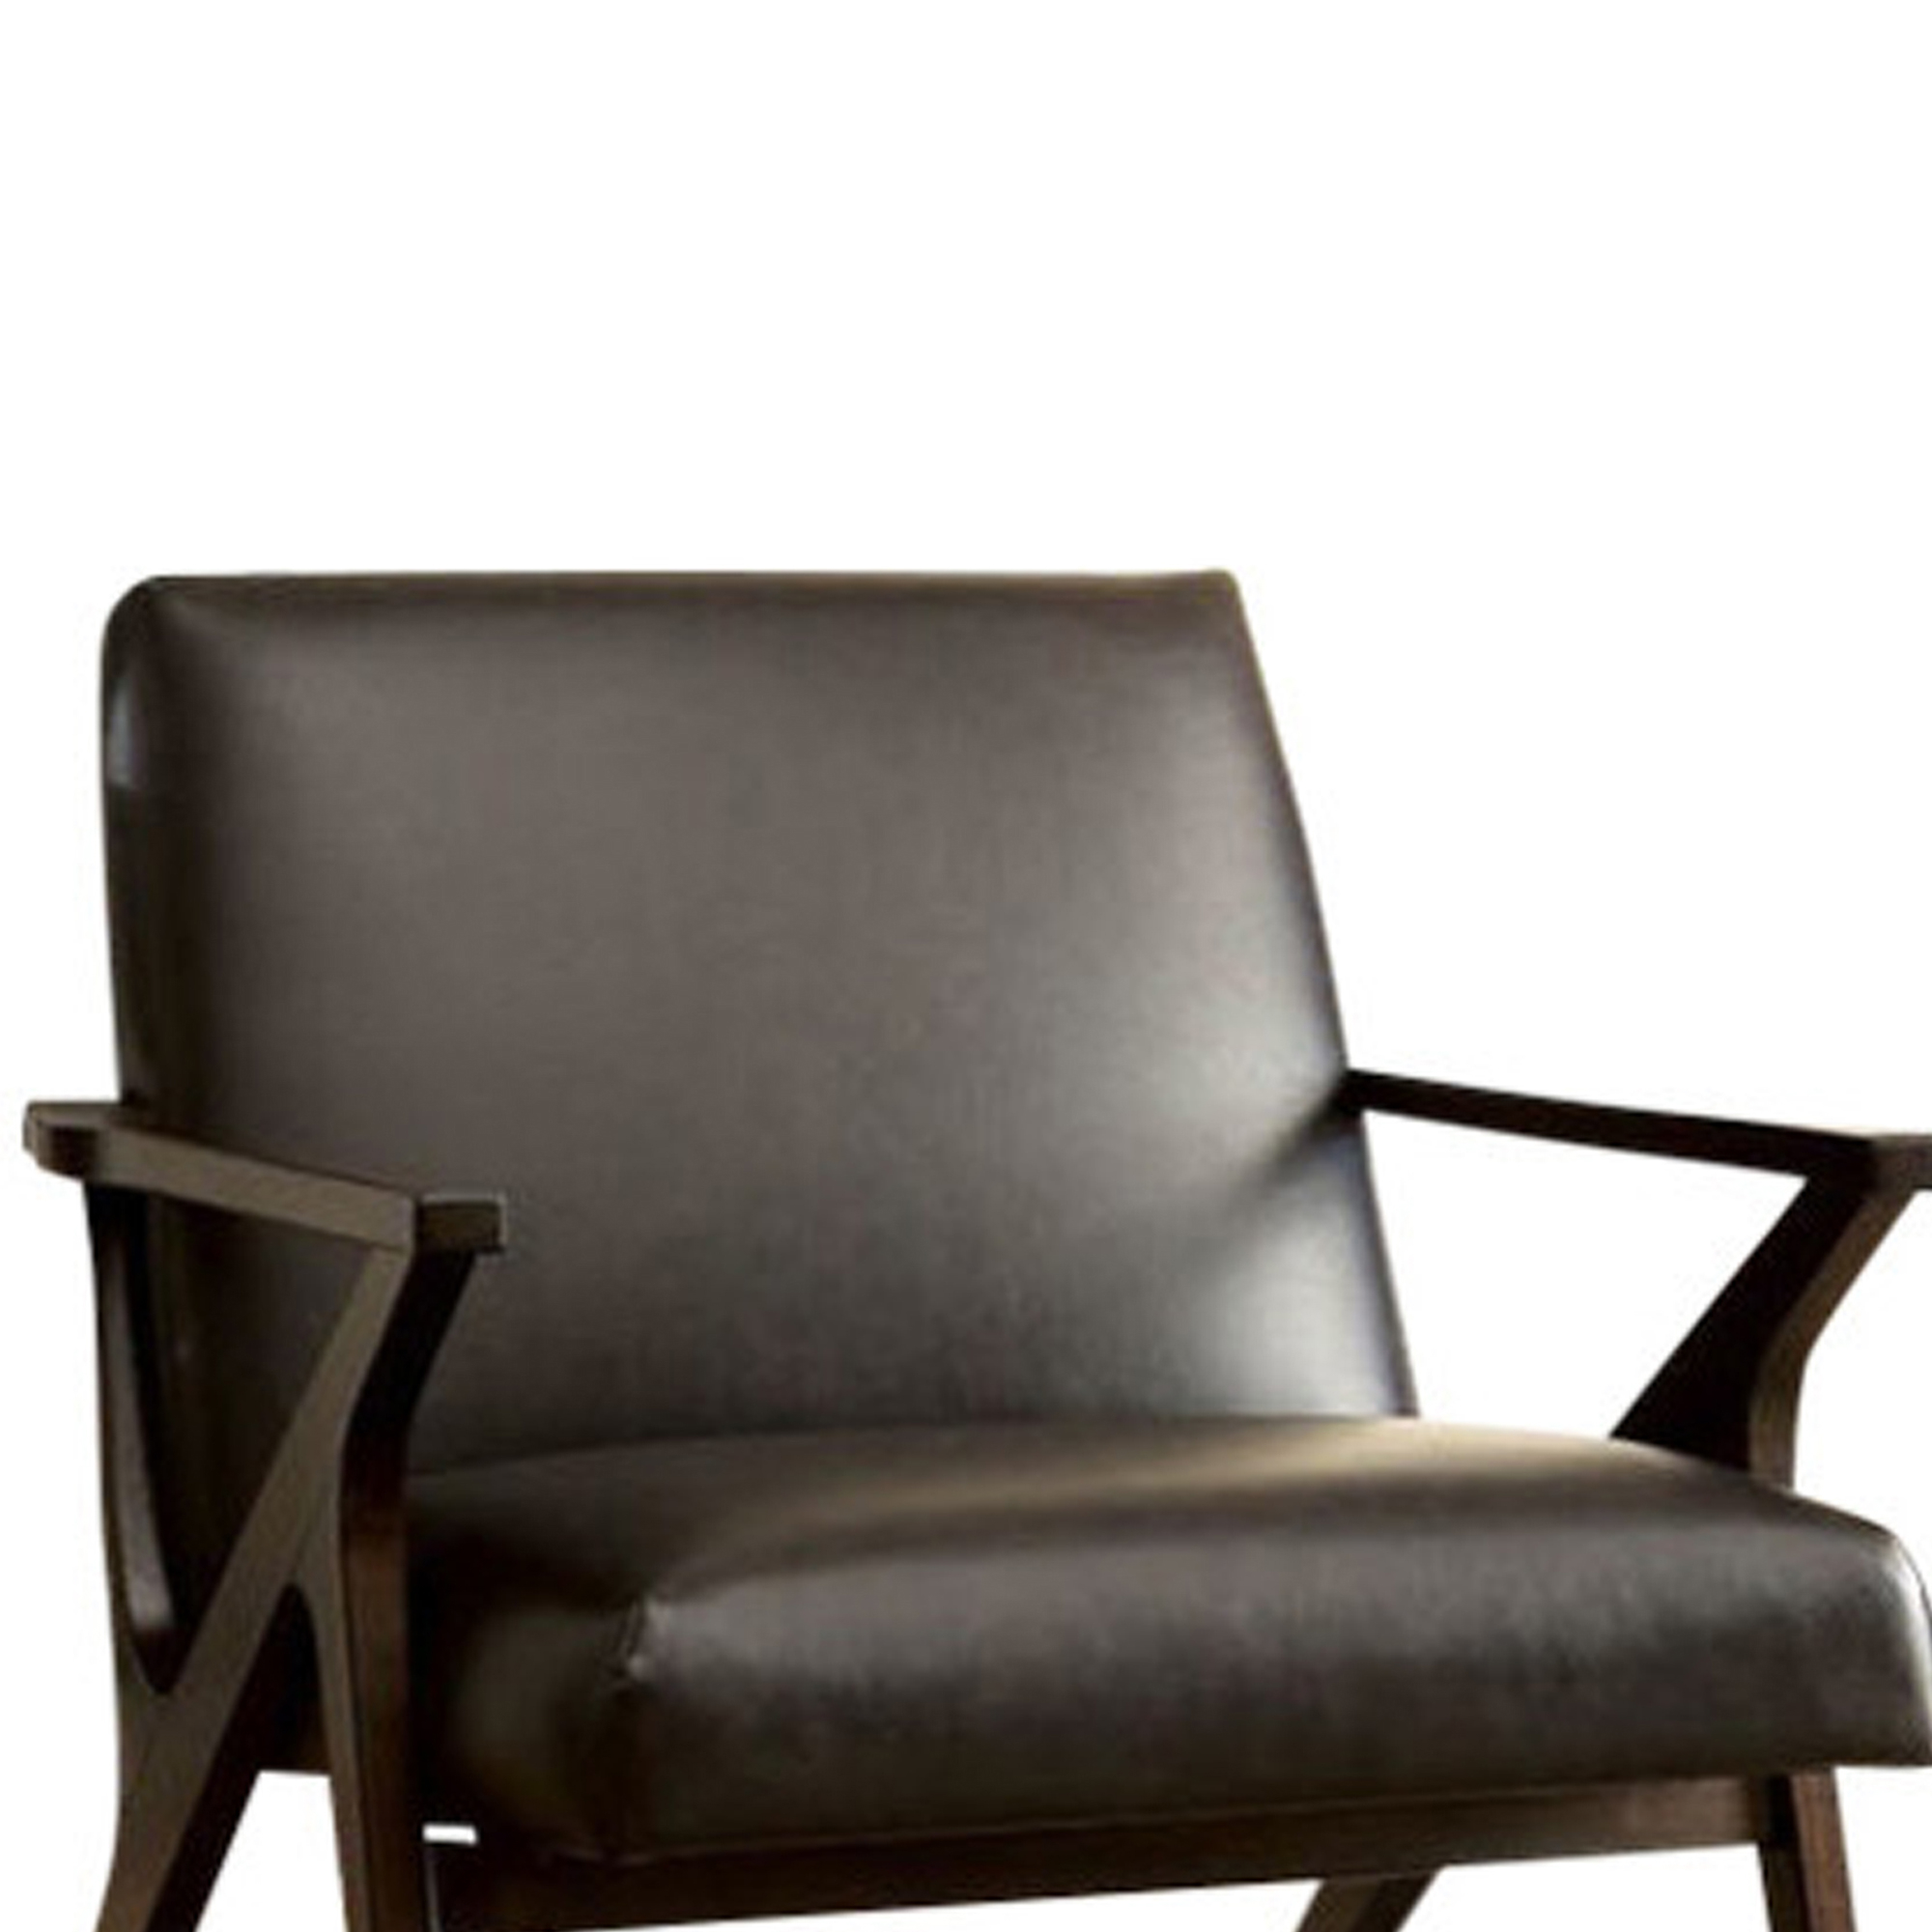 Dubois Contemporary Chair In Brown Finish- Saltoro Sherpi